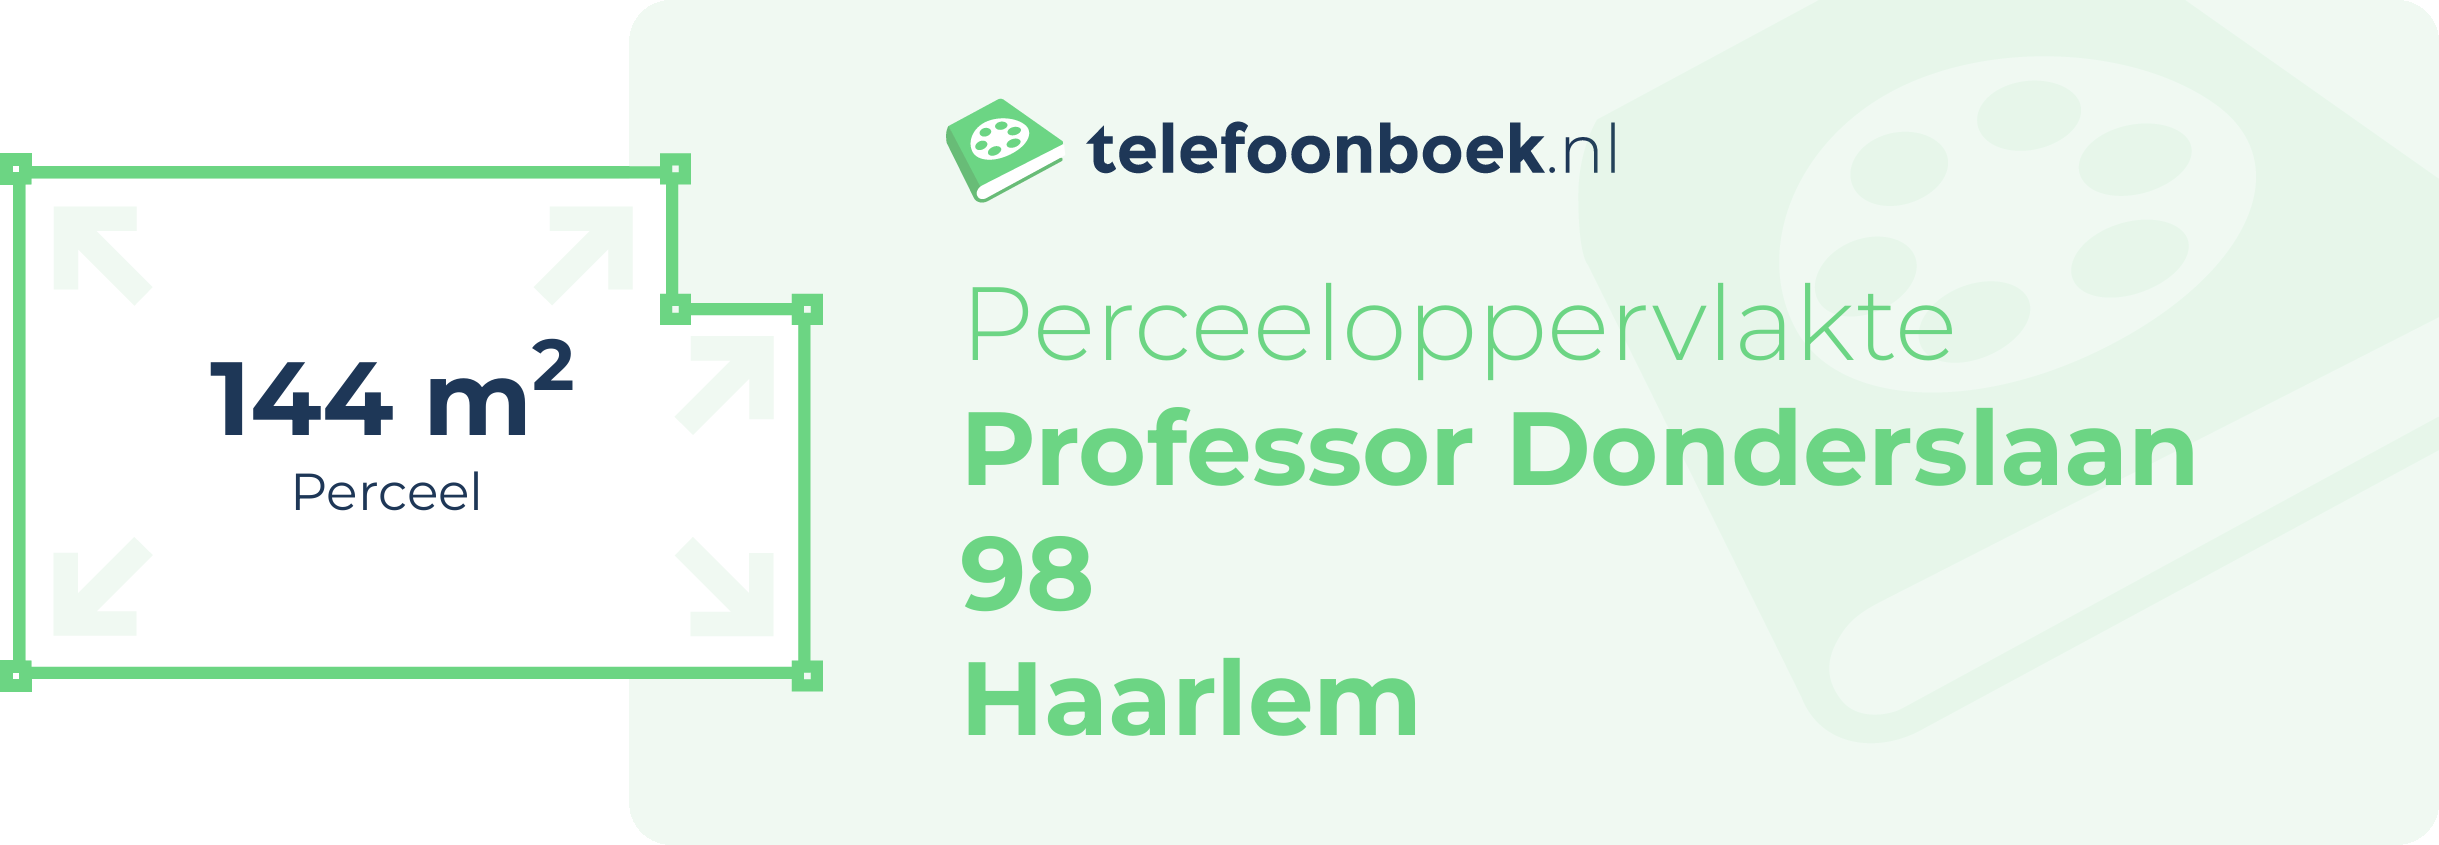 Perceeloppervlakte Professor Donderslaan 98 Haarlem